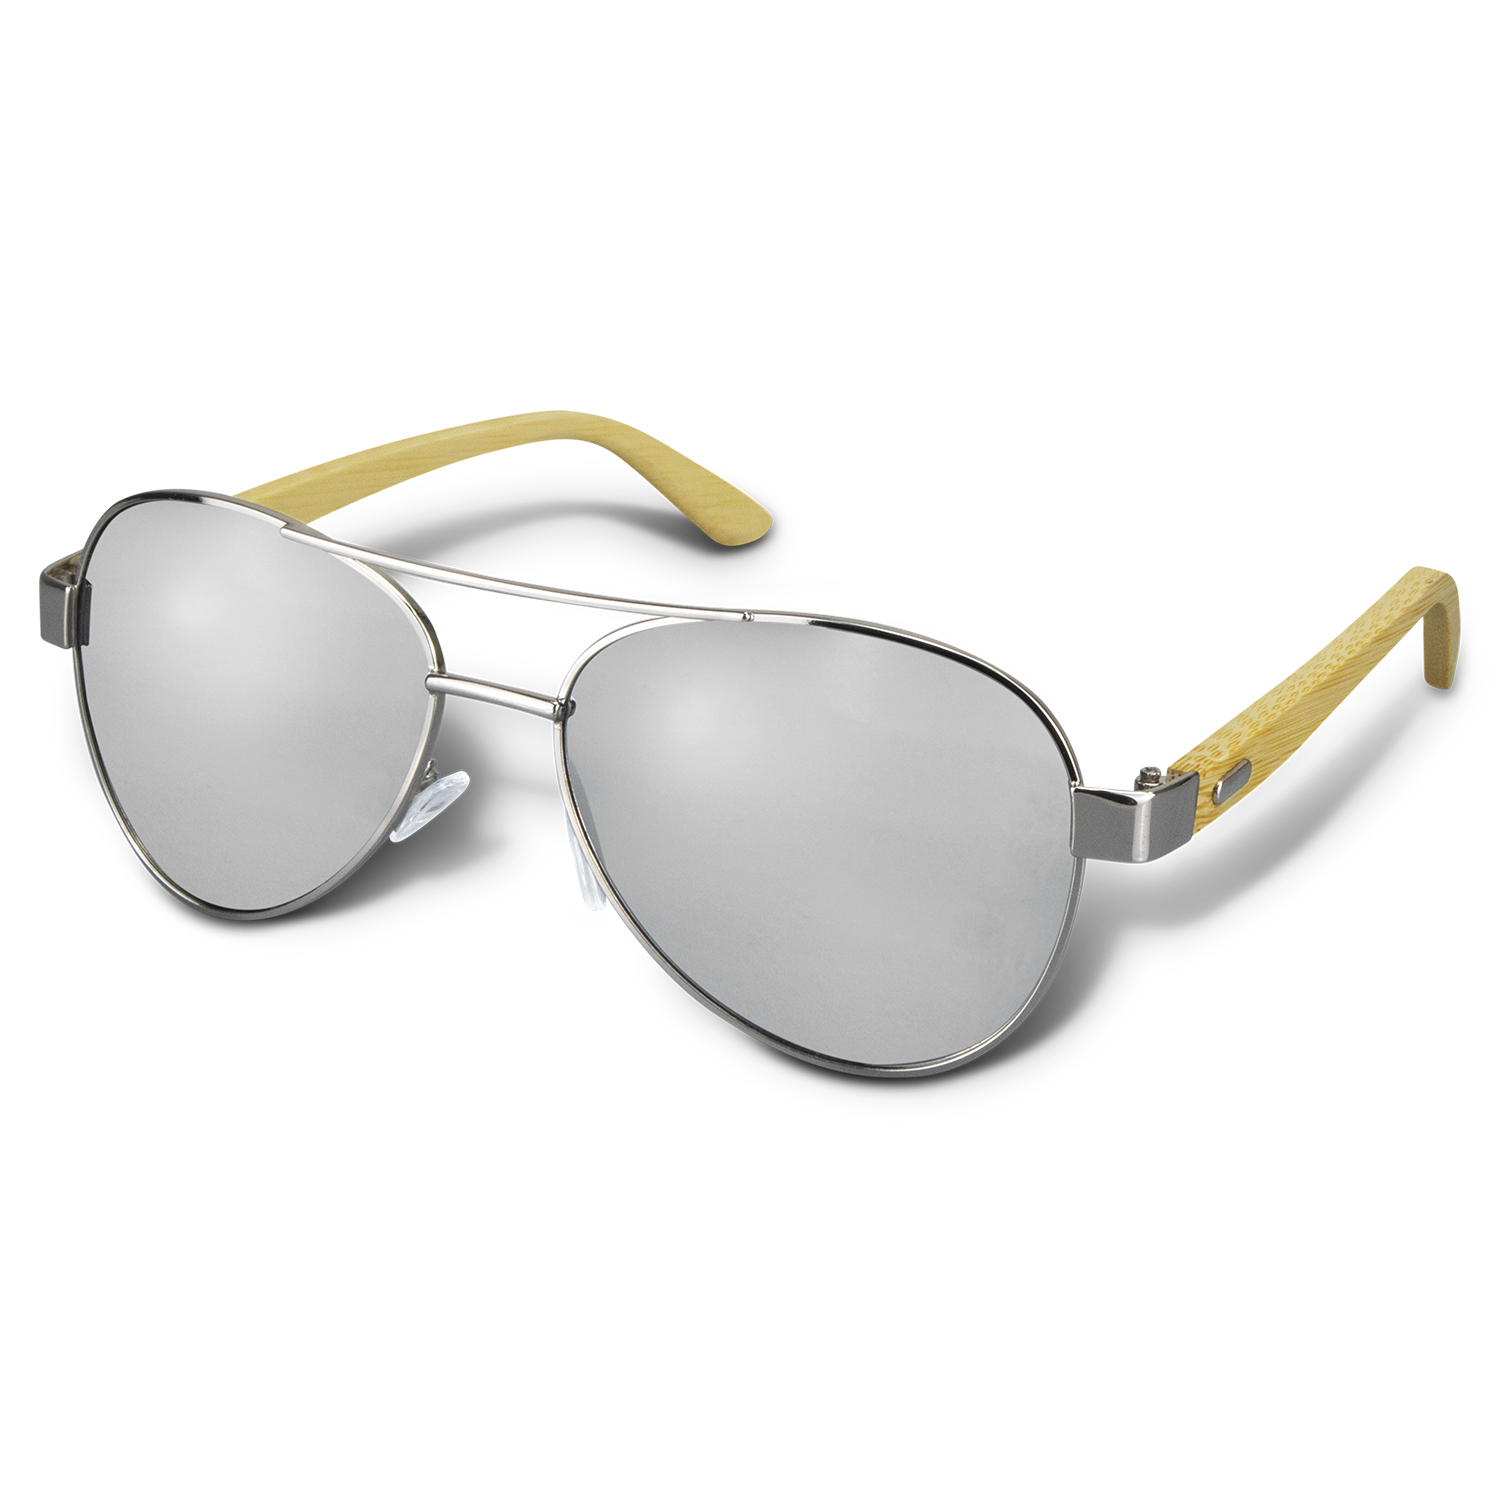 Sunglasses Aviator Mirror Lens Sunglasses – Bamboo -